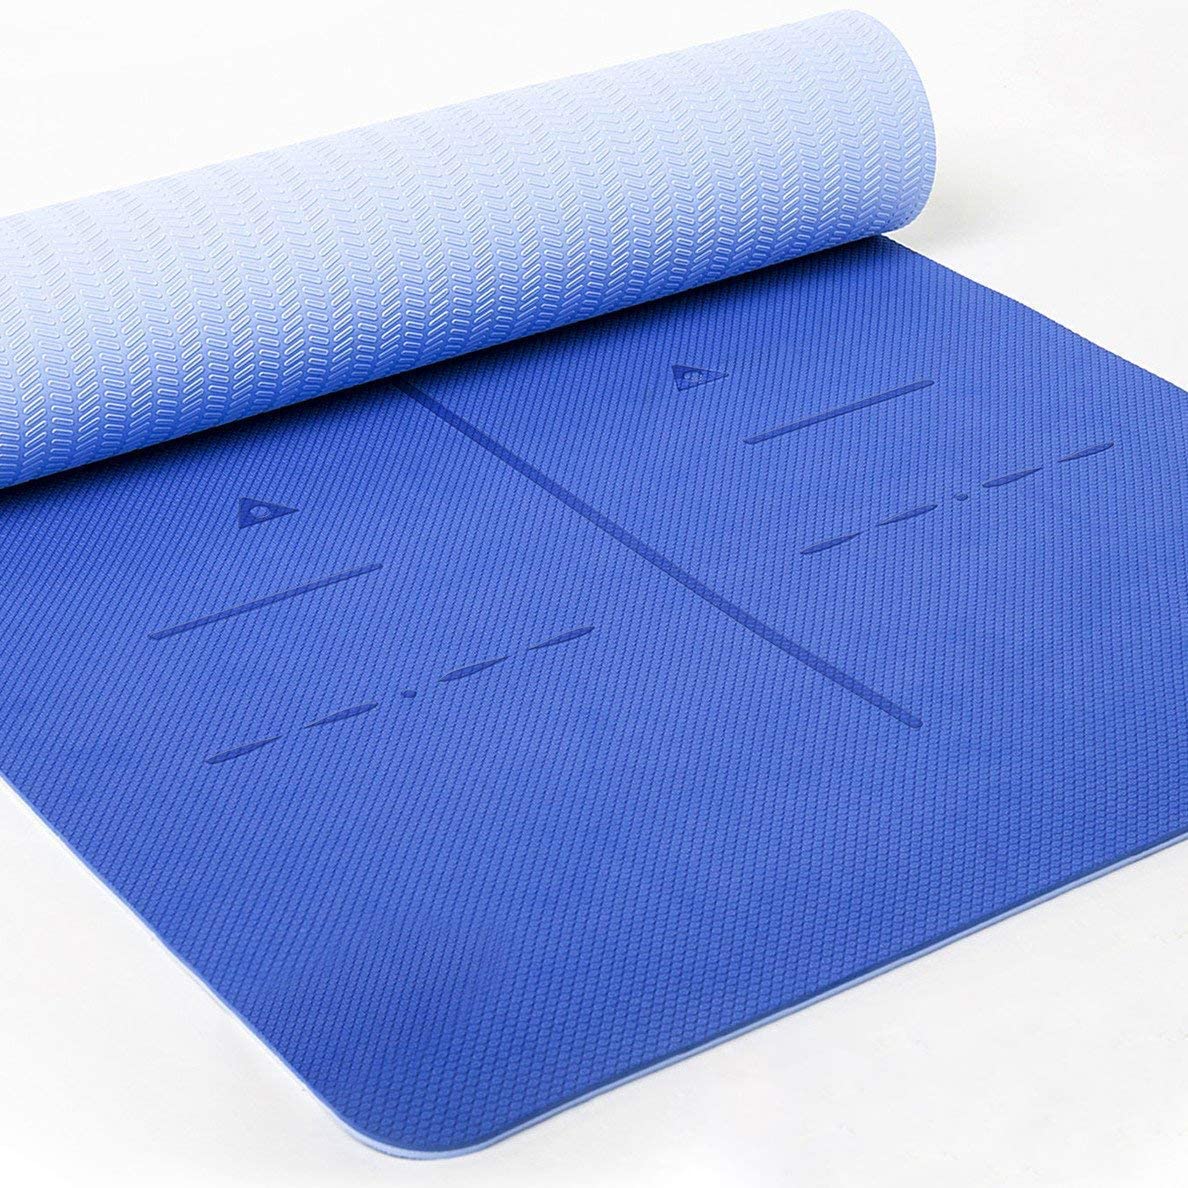 Buy your non-slip yoga mat online here.